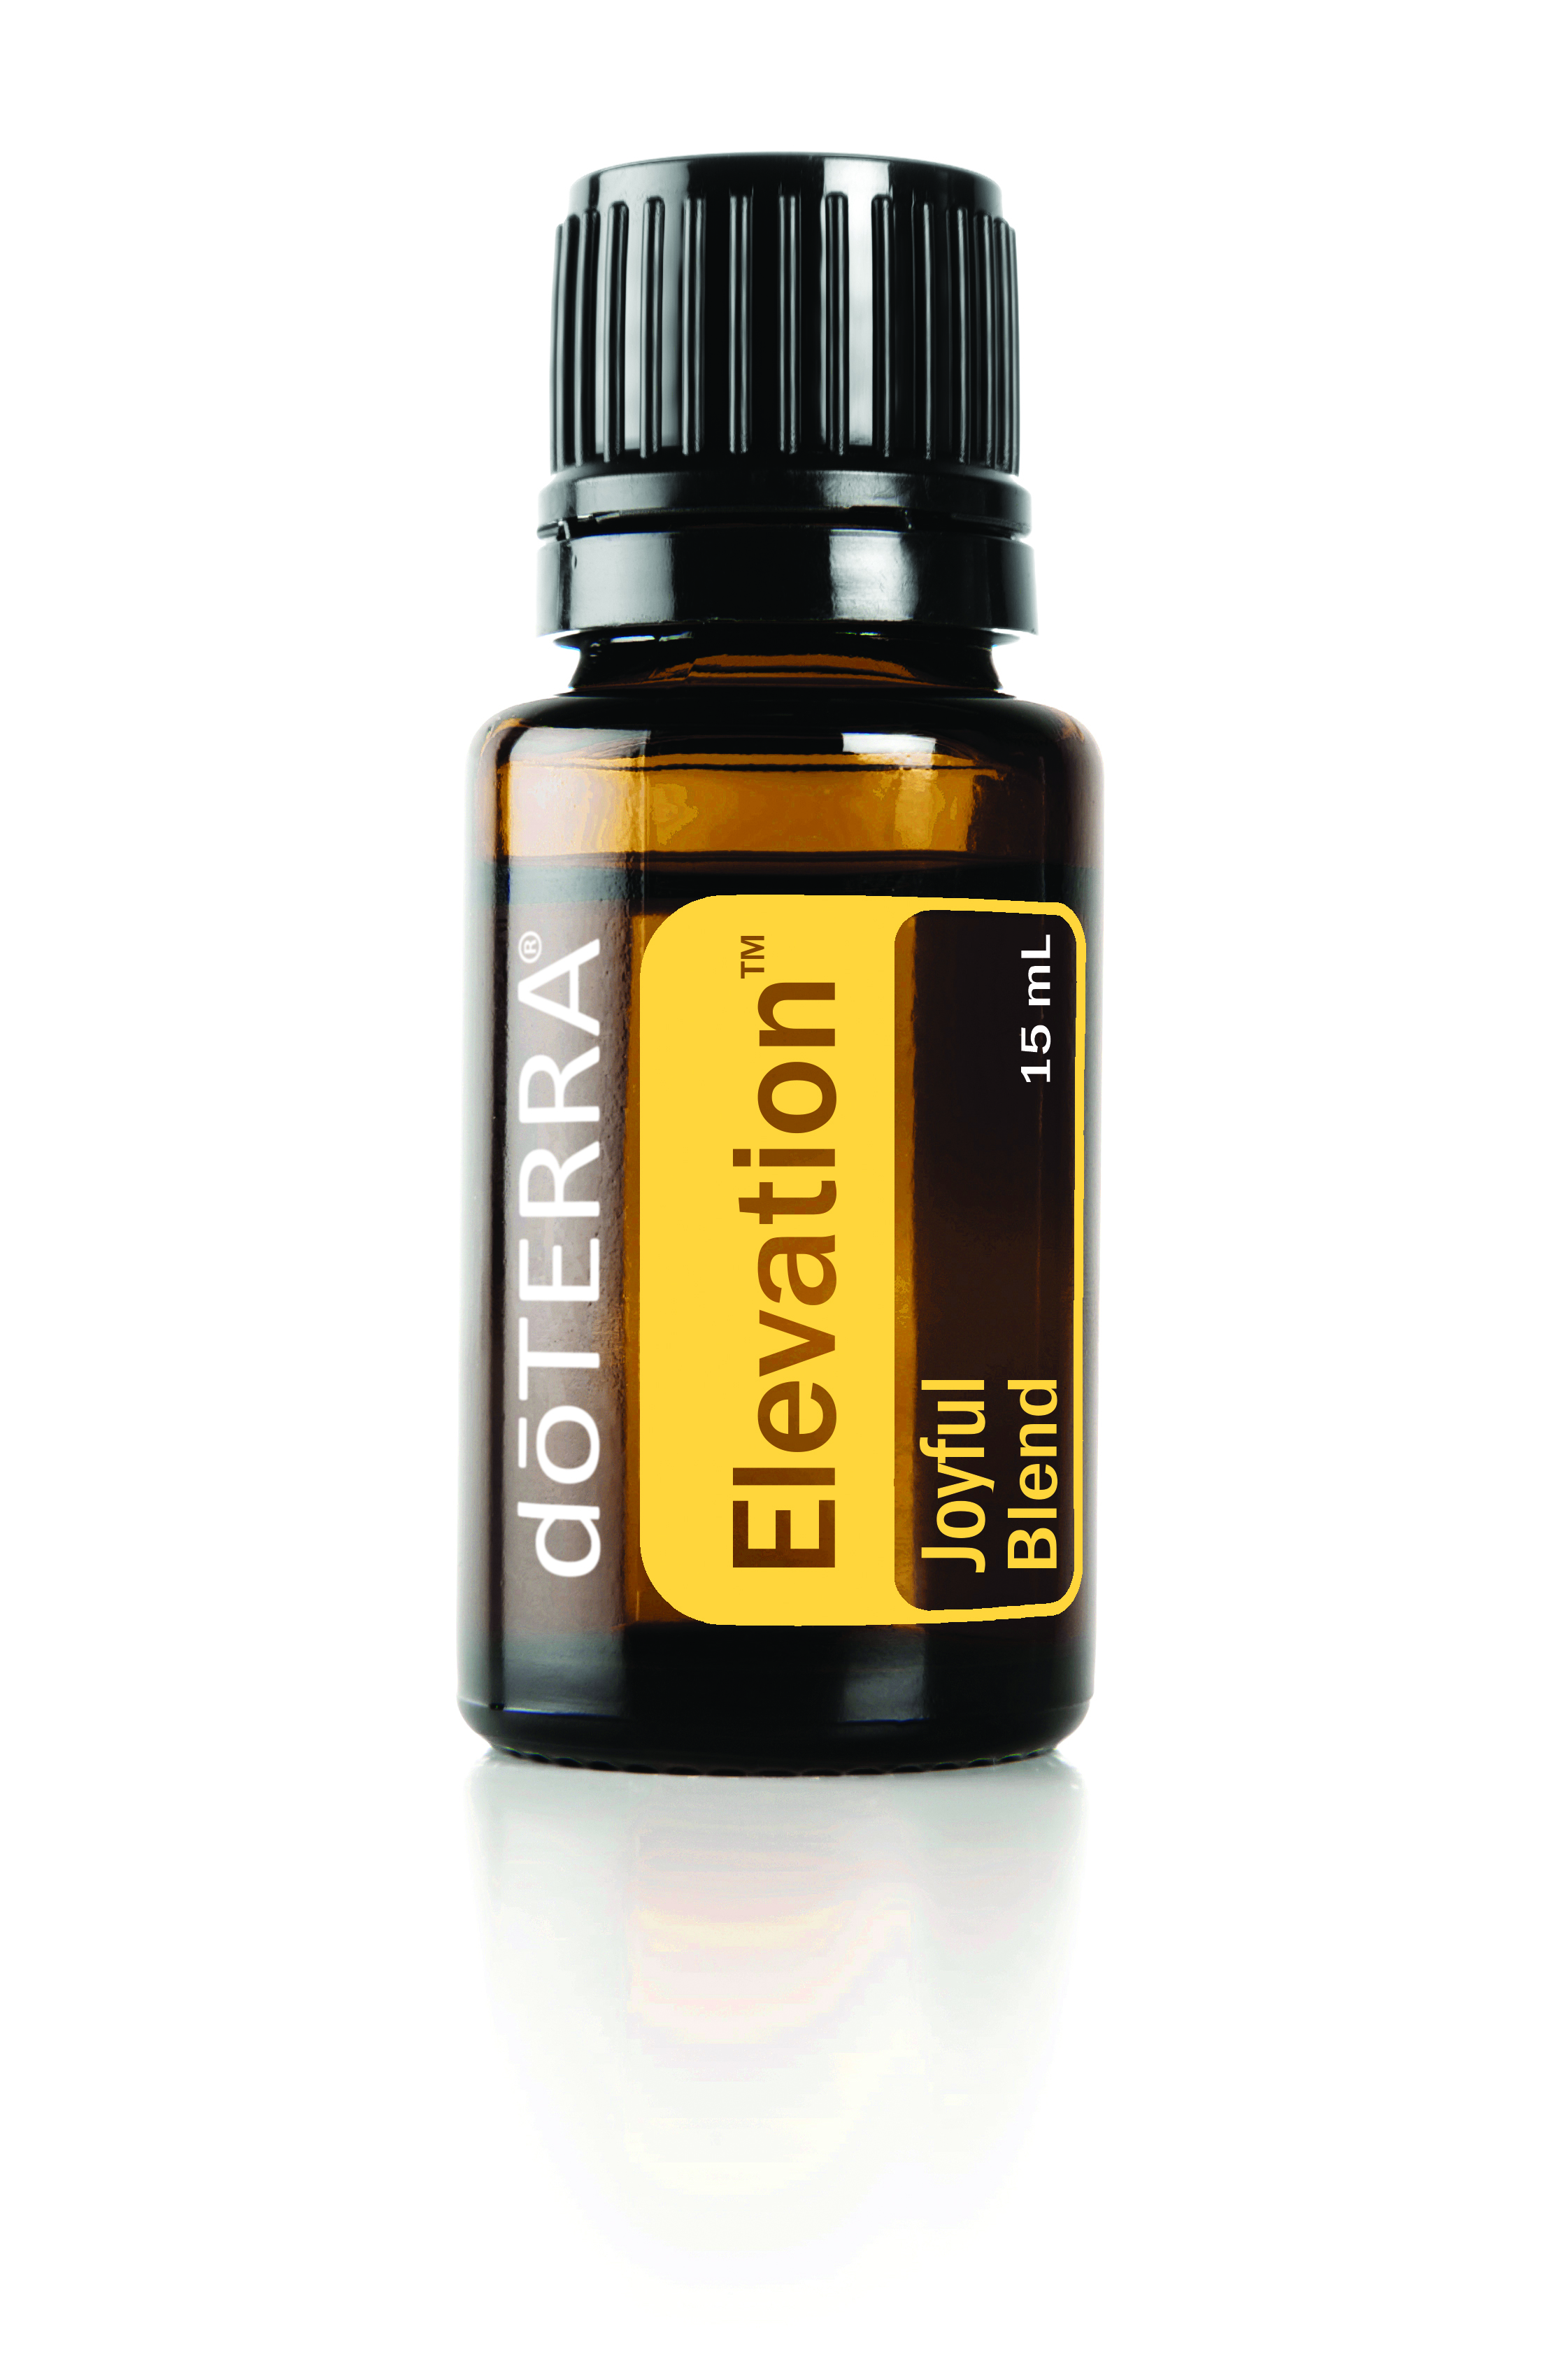 Elevation Joyful Essential Oils Blend